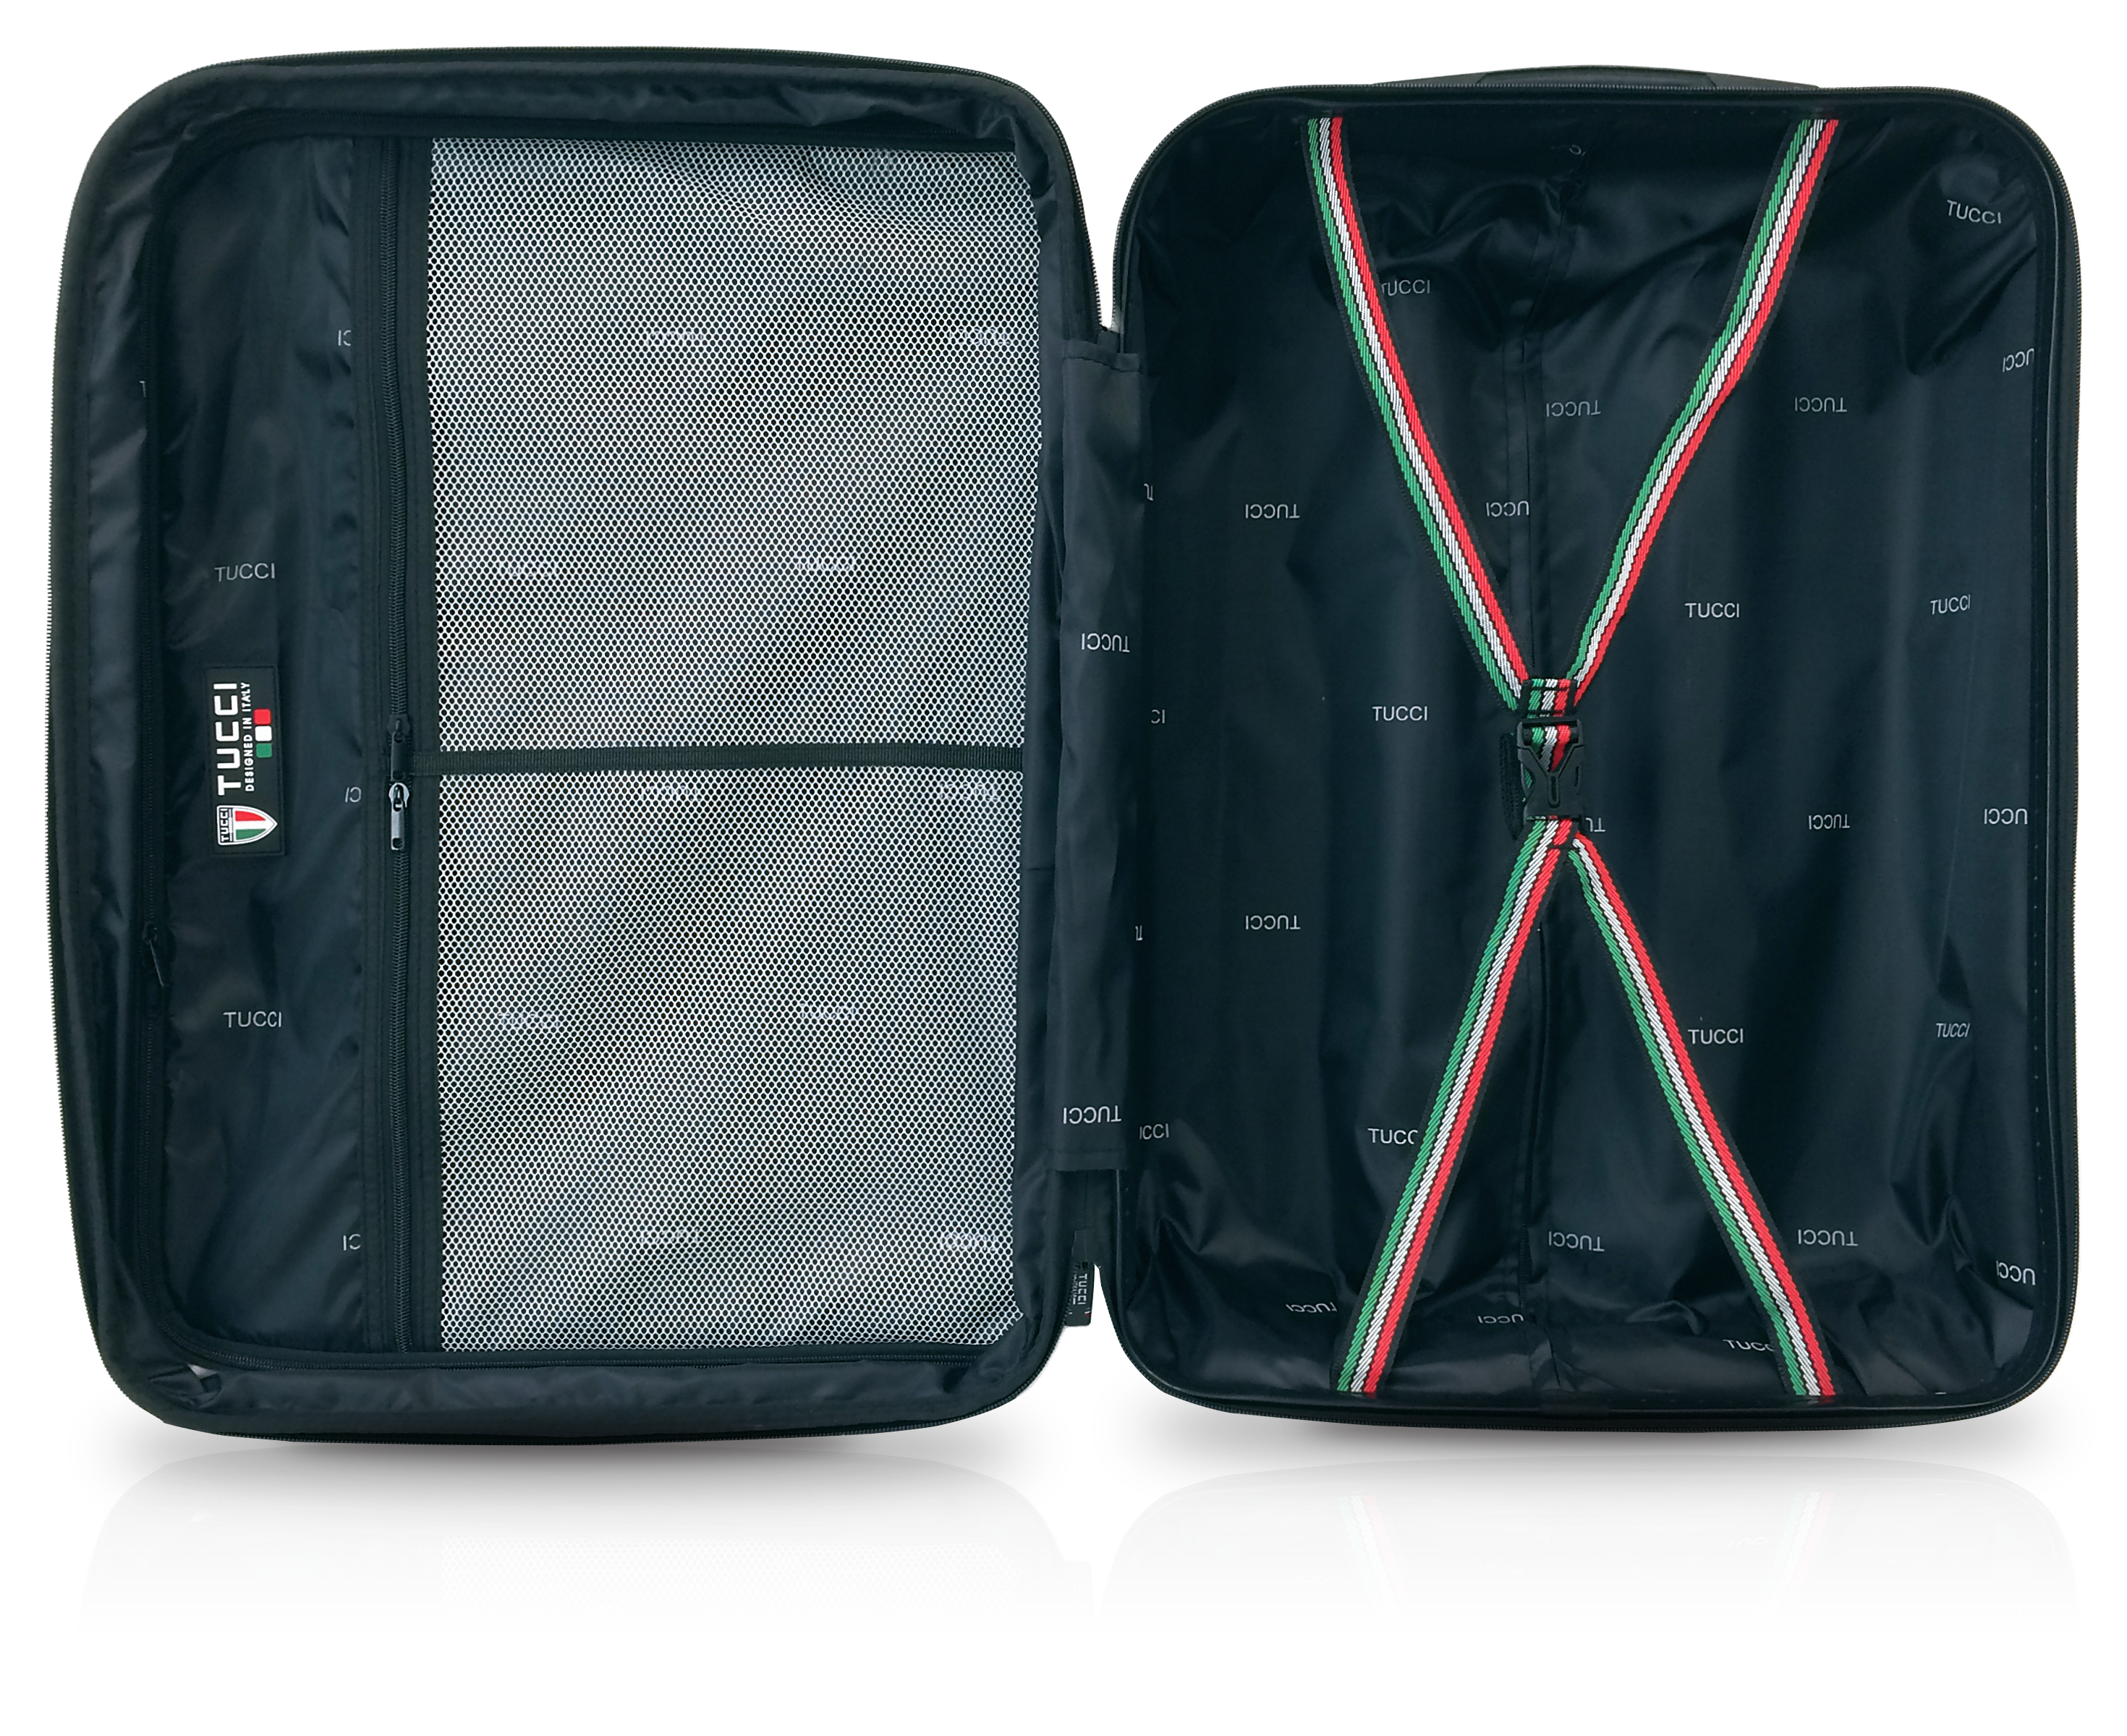 TUCCI BARATRO ABS 3 PC (20", 24", 28") Luggage Set